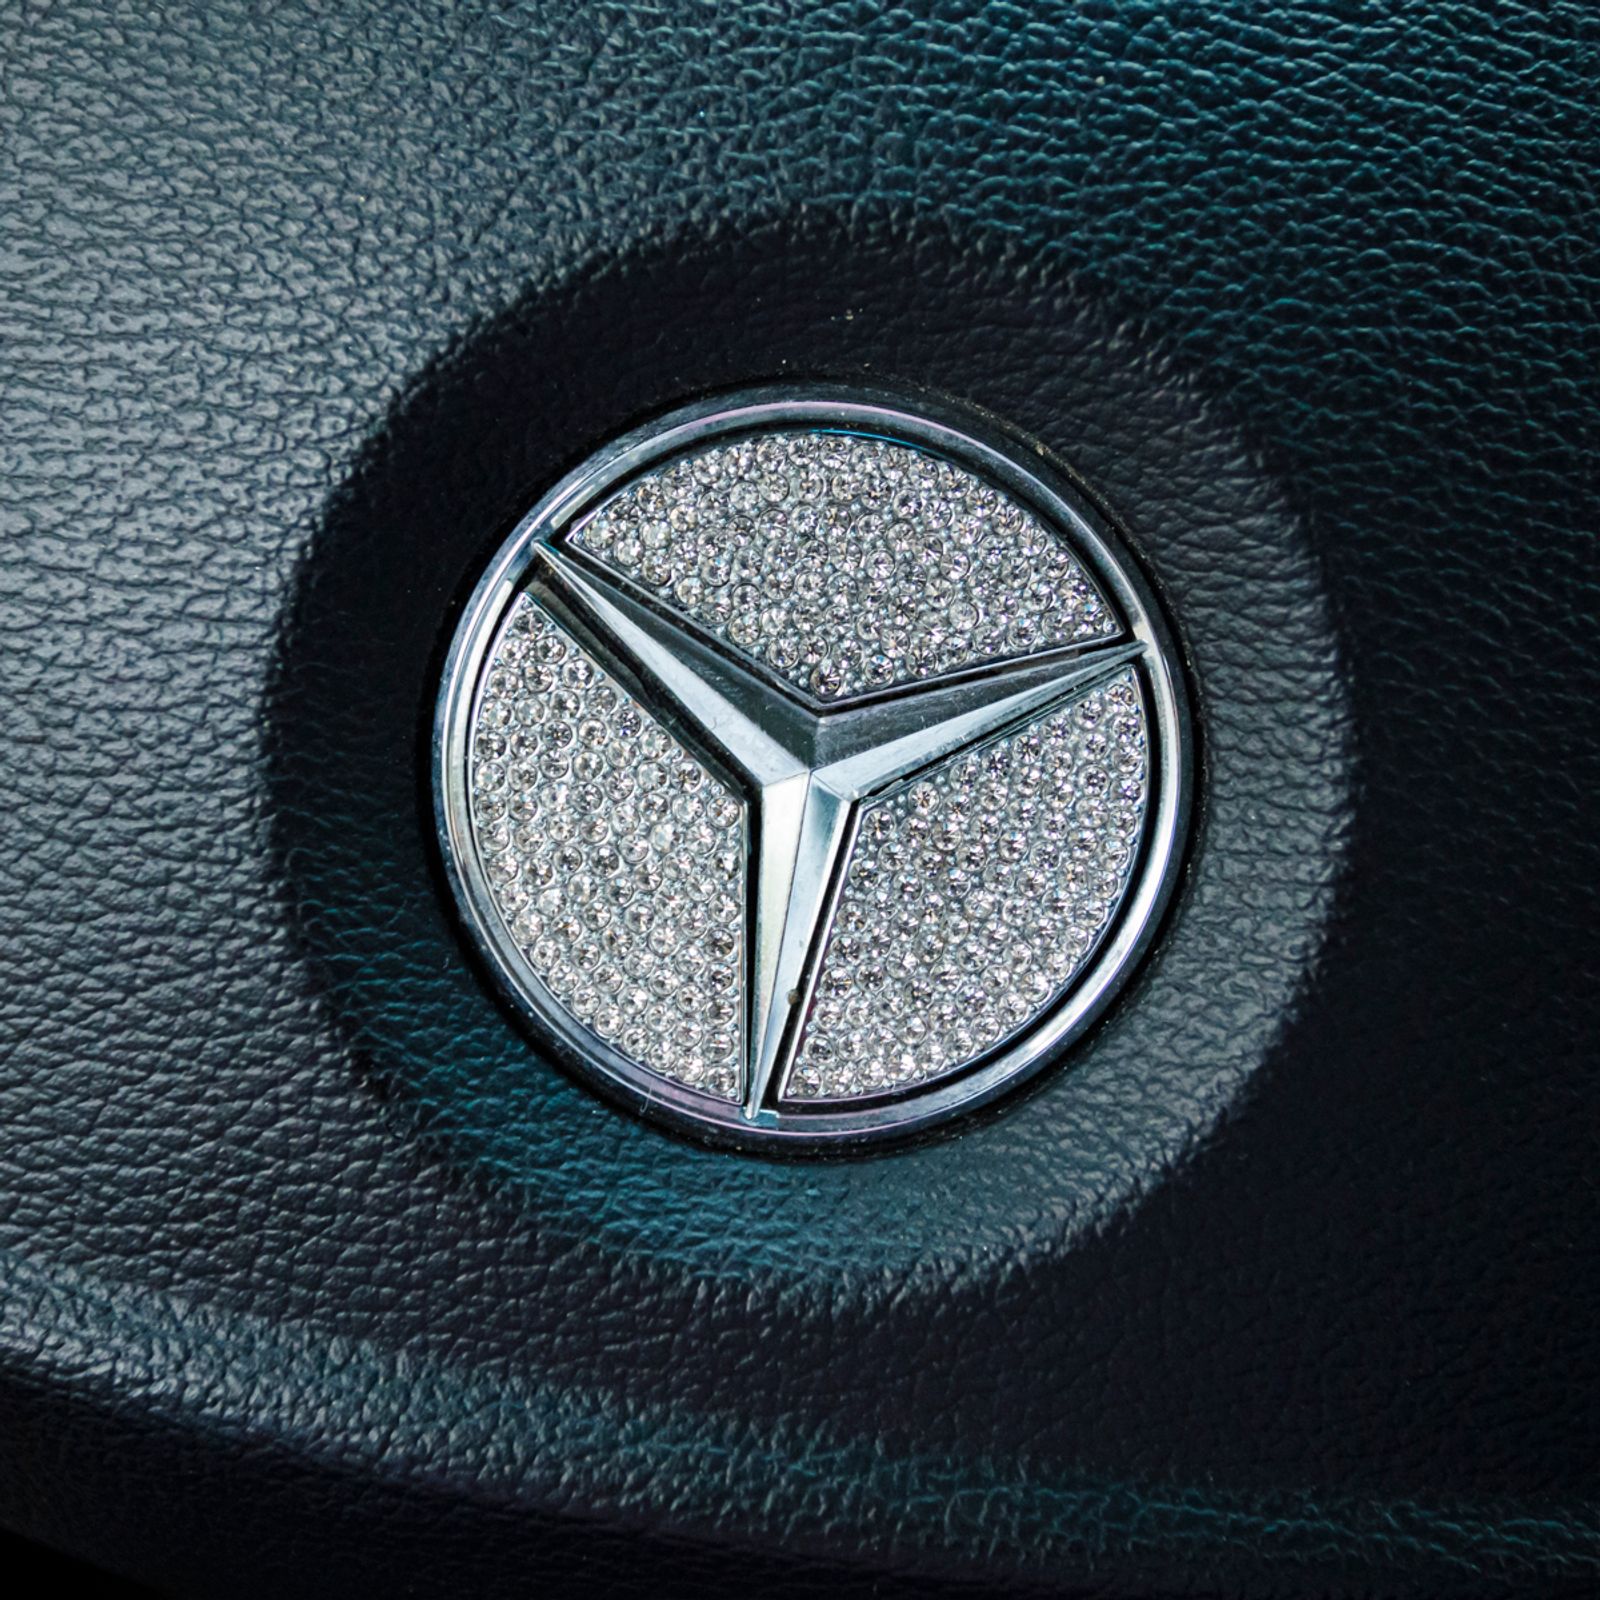 © Johanna Maria Fritz - The Mercedes star on Mihaela’s steering wheel is decorated with rhinestones. Mogoșoaia, Romania, 2019.